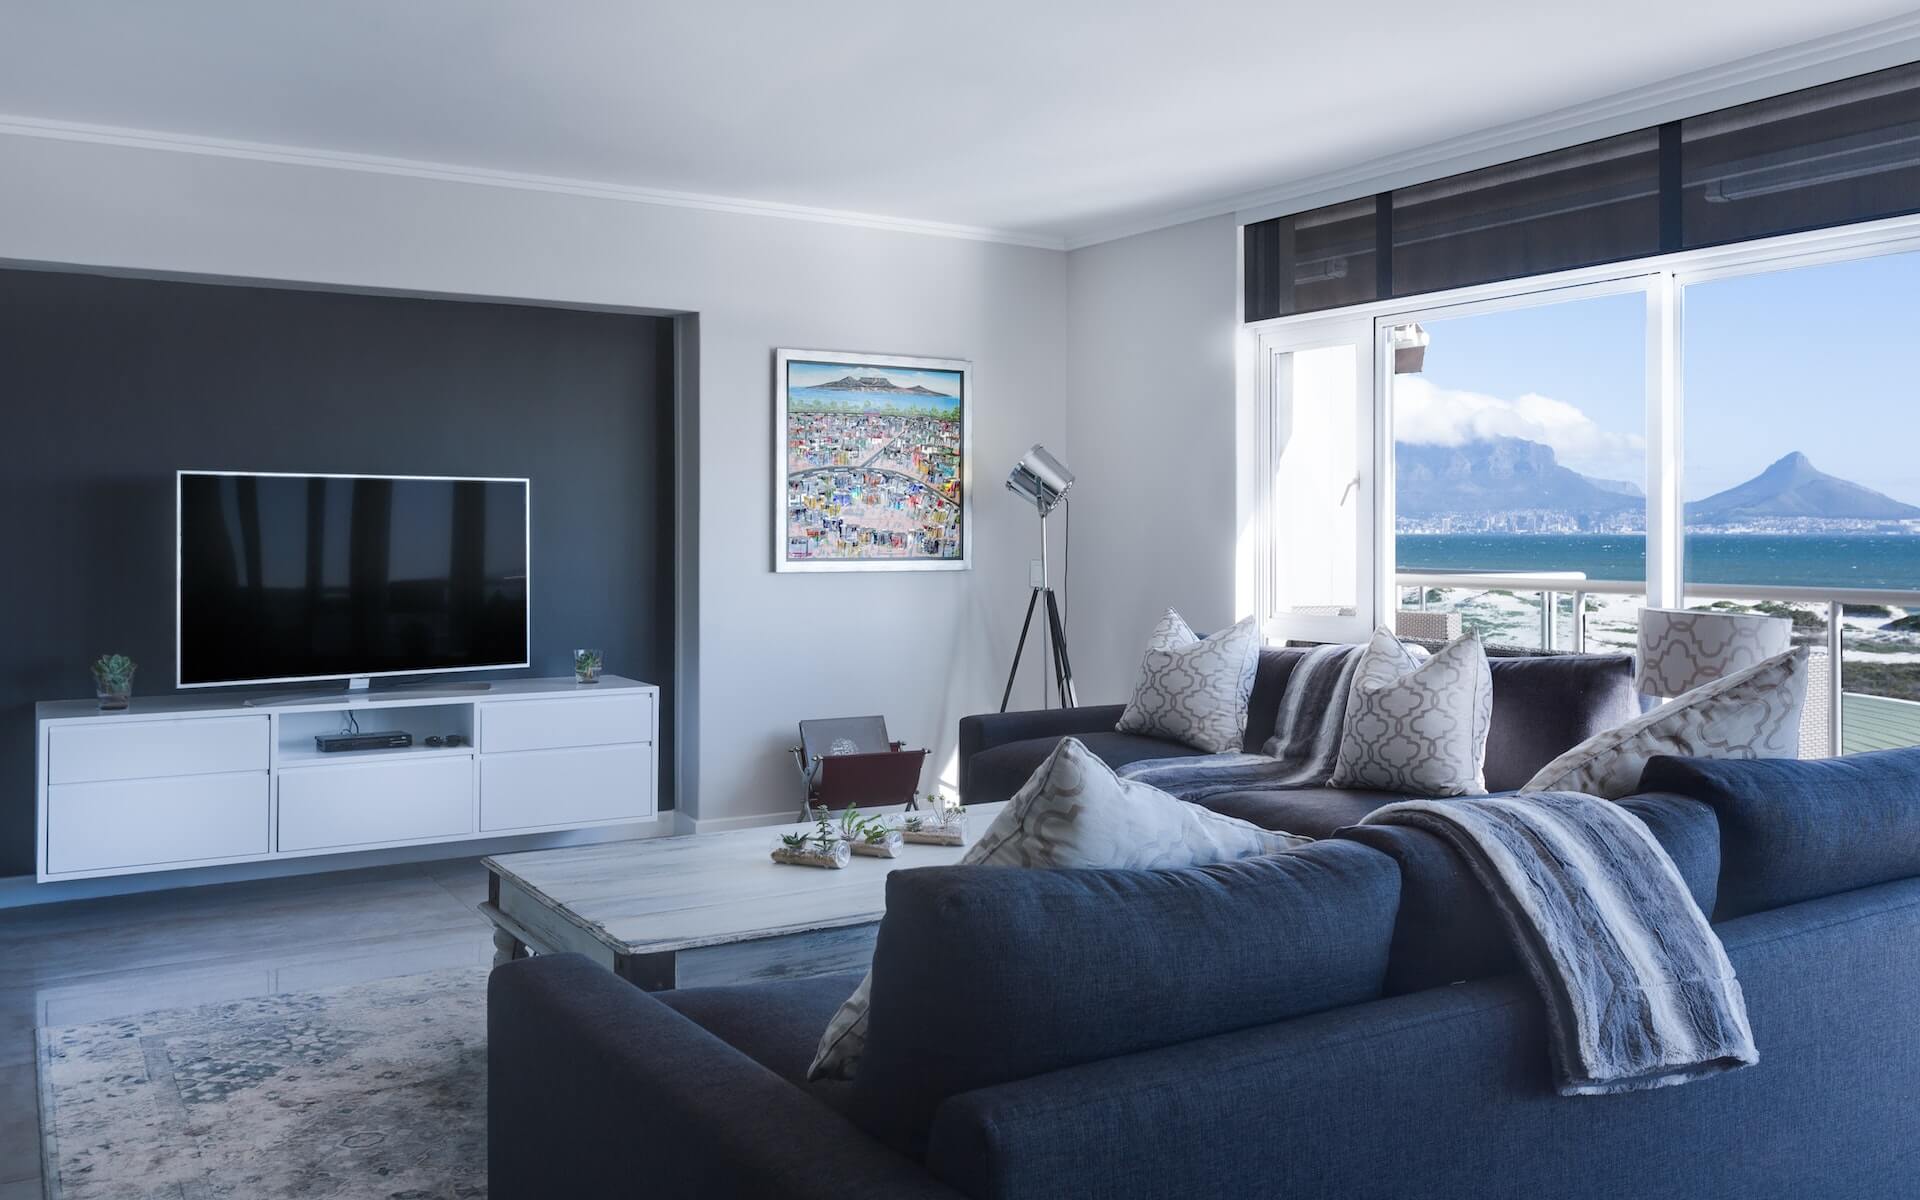 A minimalist, cool-toned neutral living room design.